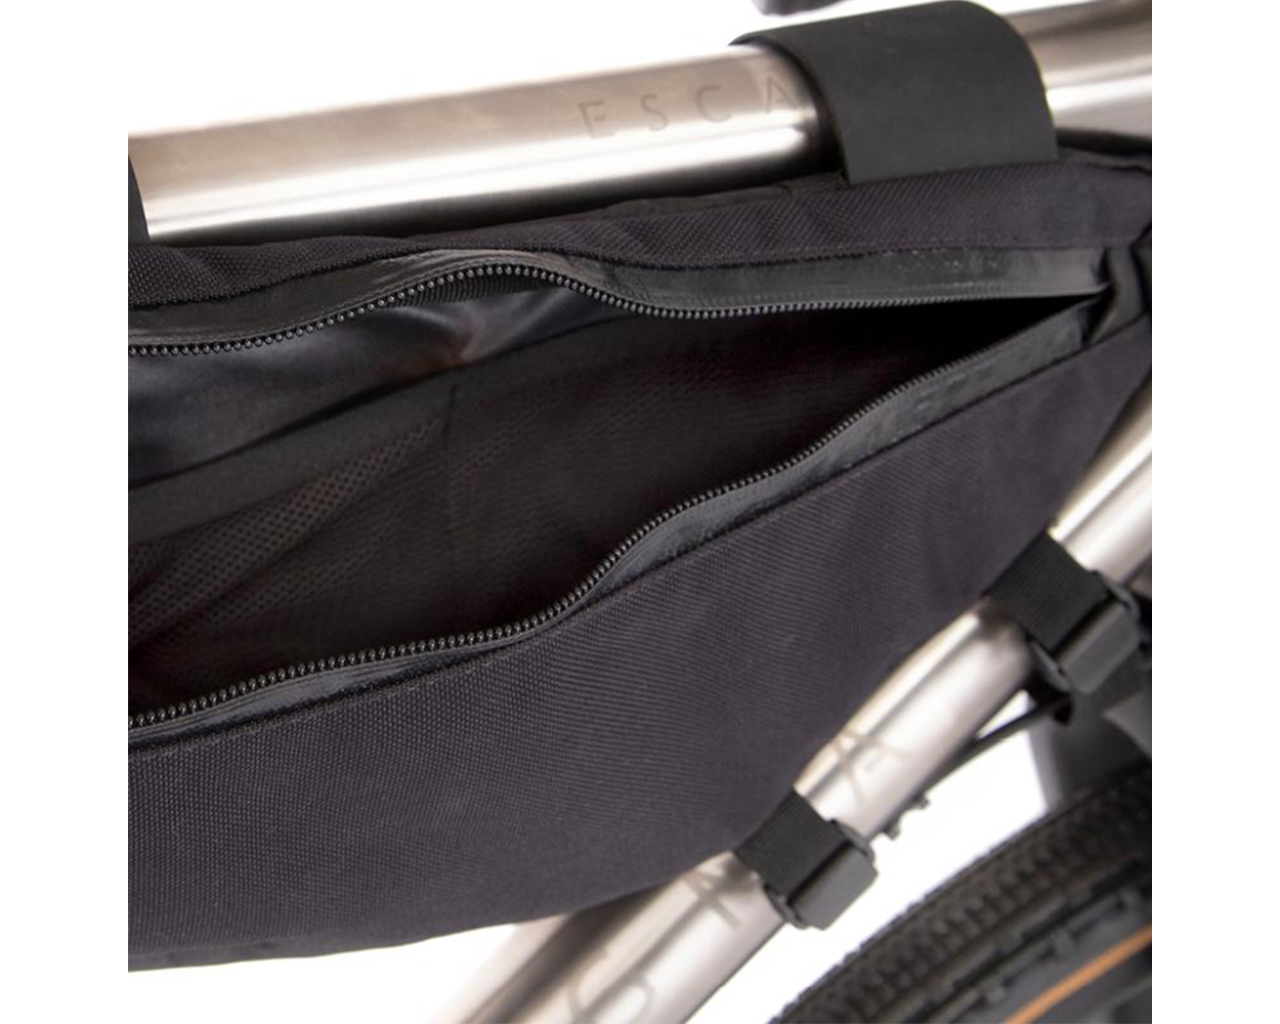 Restrap Frame Bag – Large | Merlin Cycles